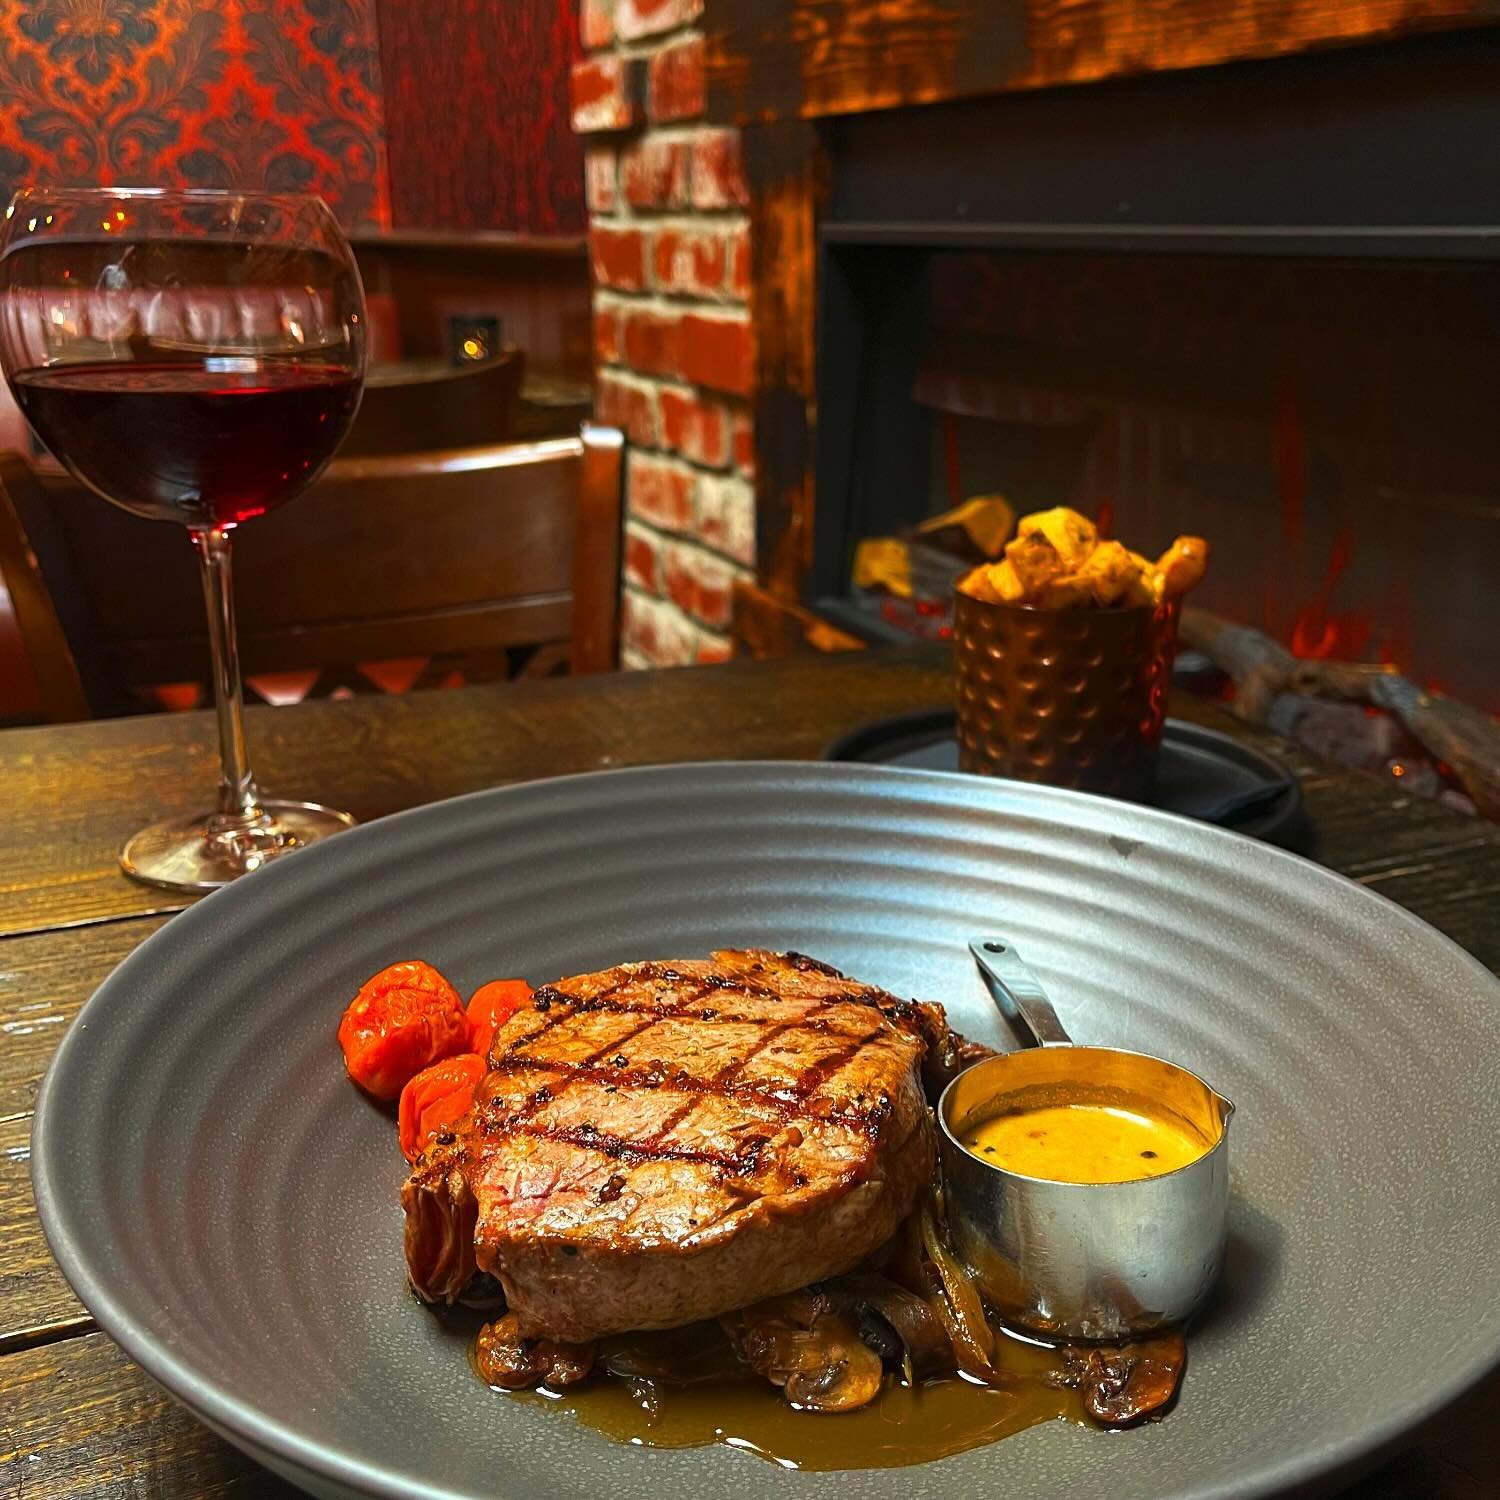 Enjoy our Rib-Eye Steak 🥩🔥 Grilled on a Solas Grill with Wood, Charcoal &amp; Fire 🔥 #buffaloboysteakhouse #carrickonshannon #leitrim #leitrimtourism #leitrimobserver 
@mycarrick @yeschef.ireland @tasteleitrim